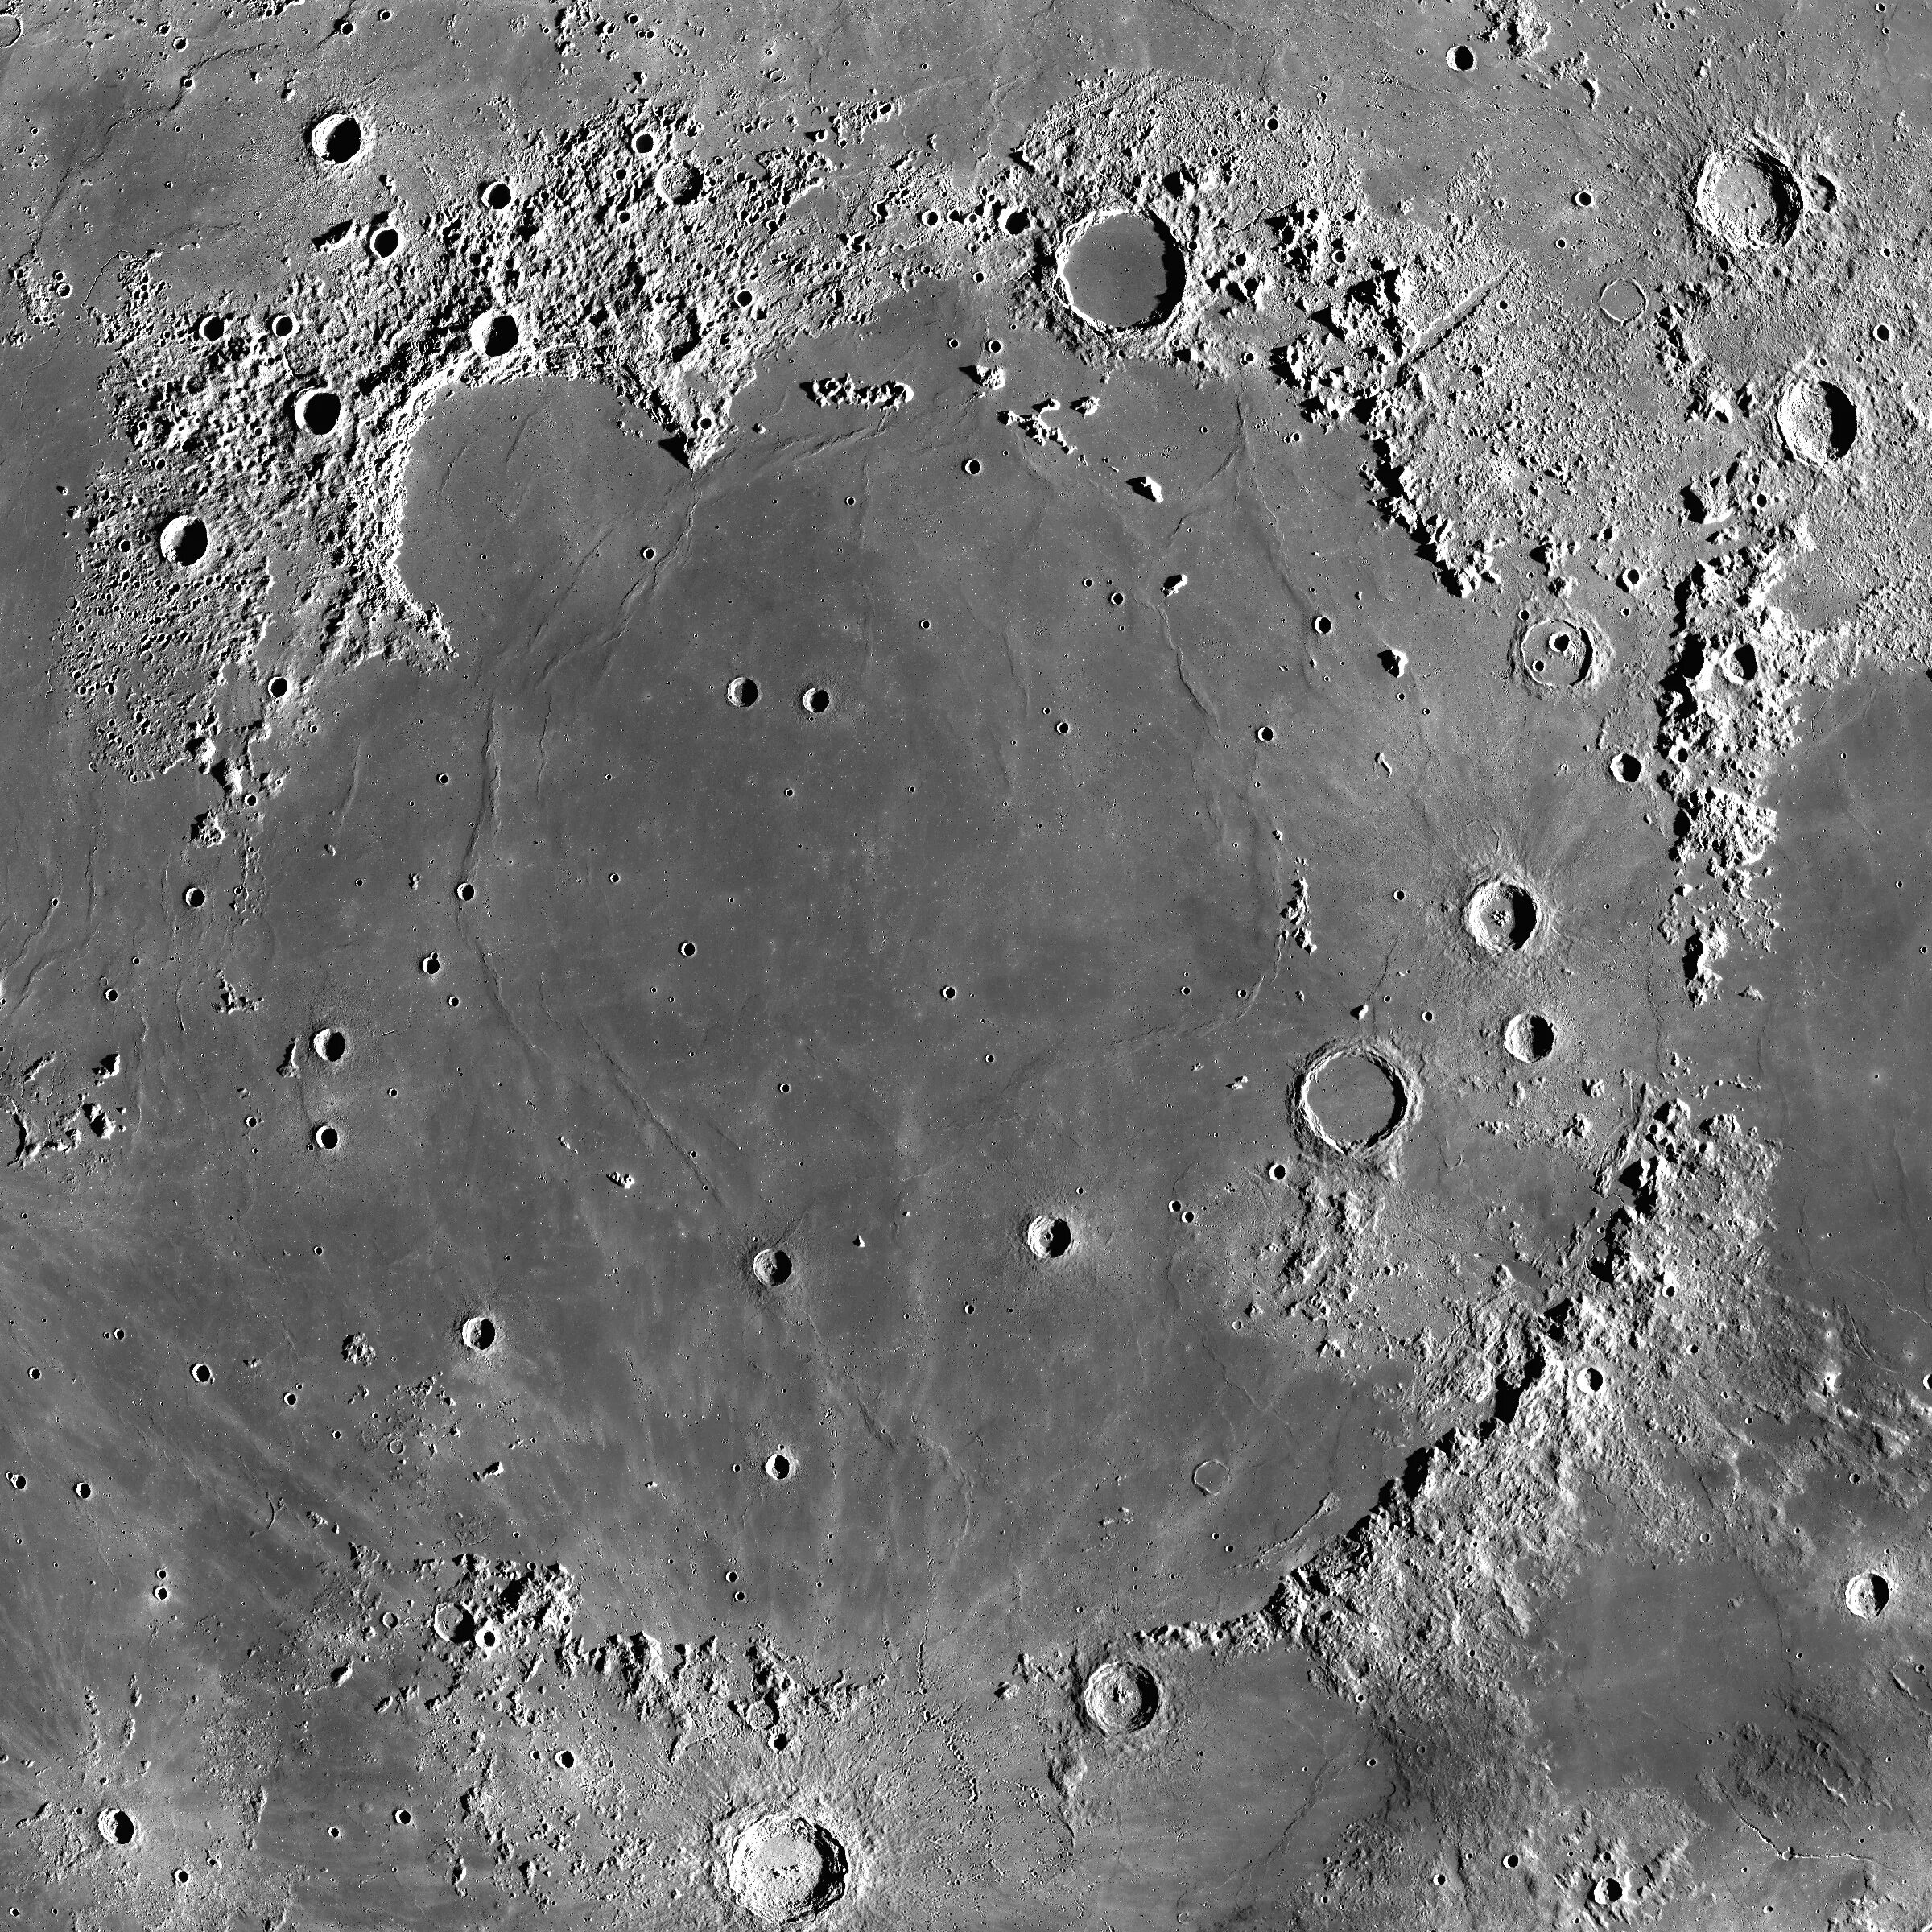 Кратеры на Луне. Кратер Ван де Грааф. Поверхность Луны кратеры и моря. Луна и море. Луна поверхность кратеры